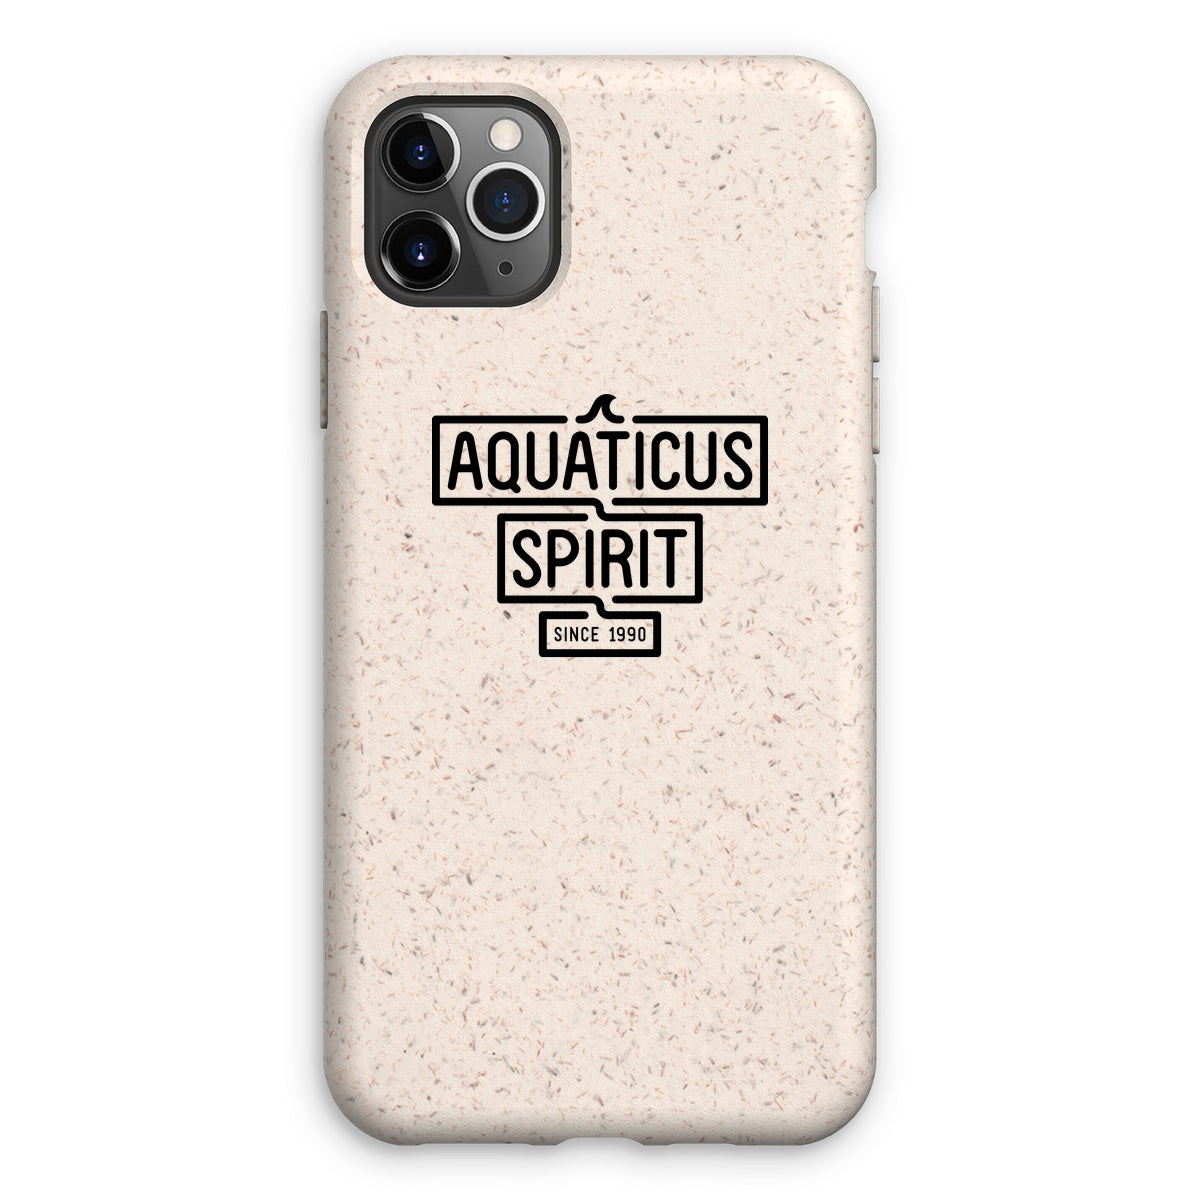 AQUA - 02 - Aquaticus Spirit - Capa Eco para Telefone